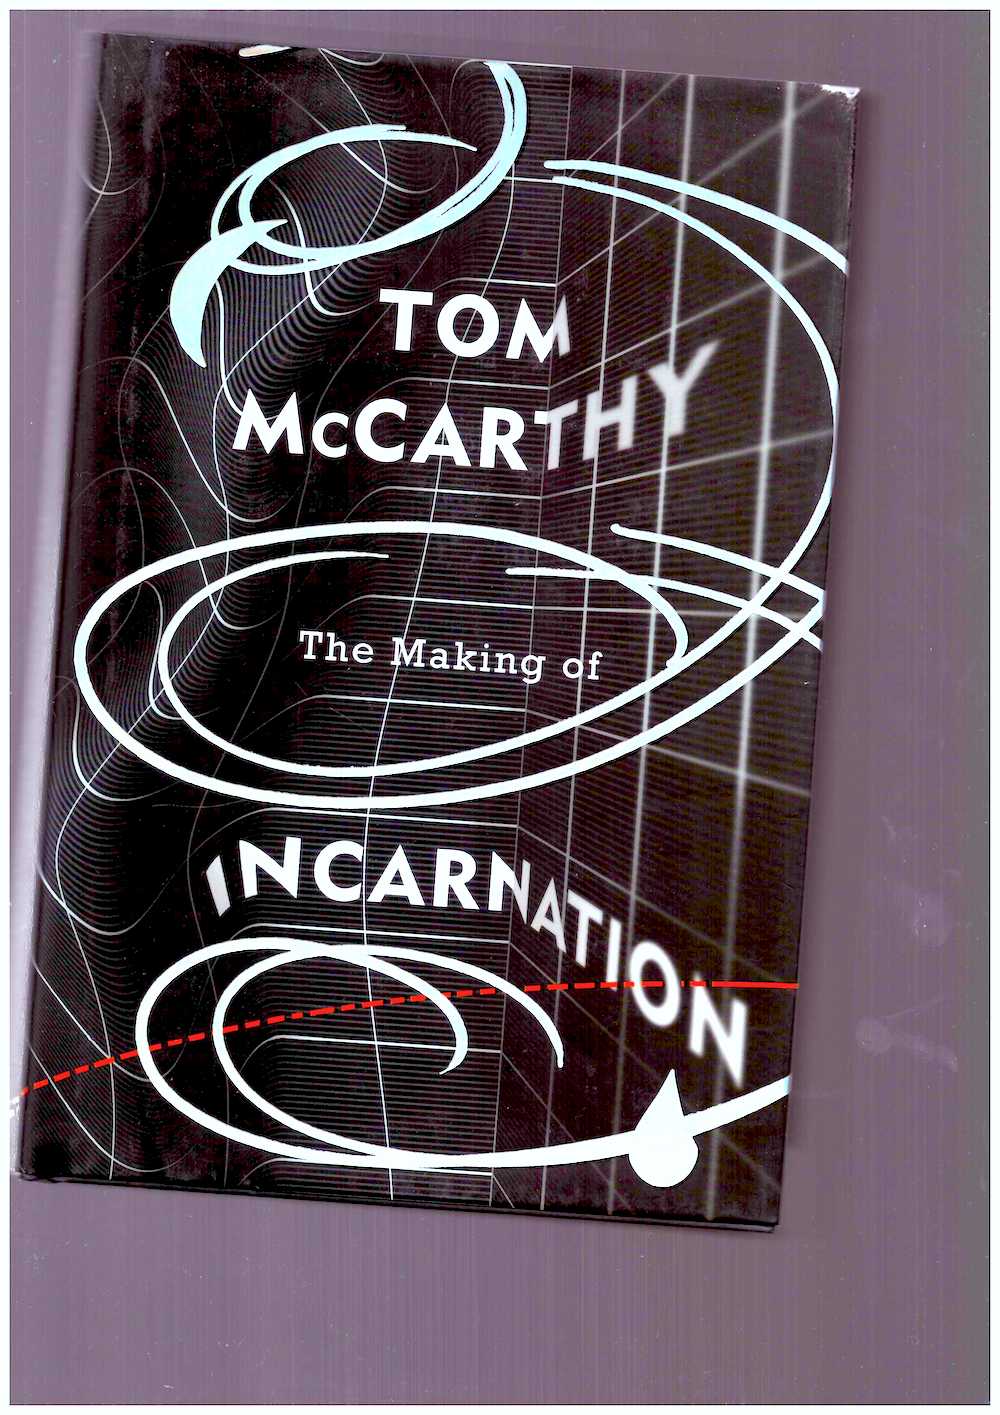 McCARTHY, Tom - The Making of Incarnation